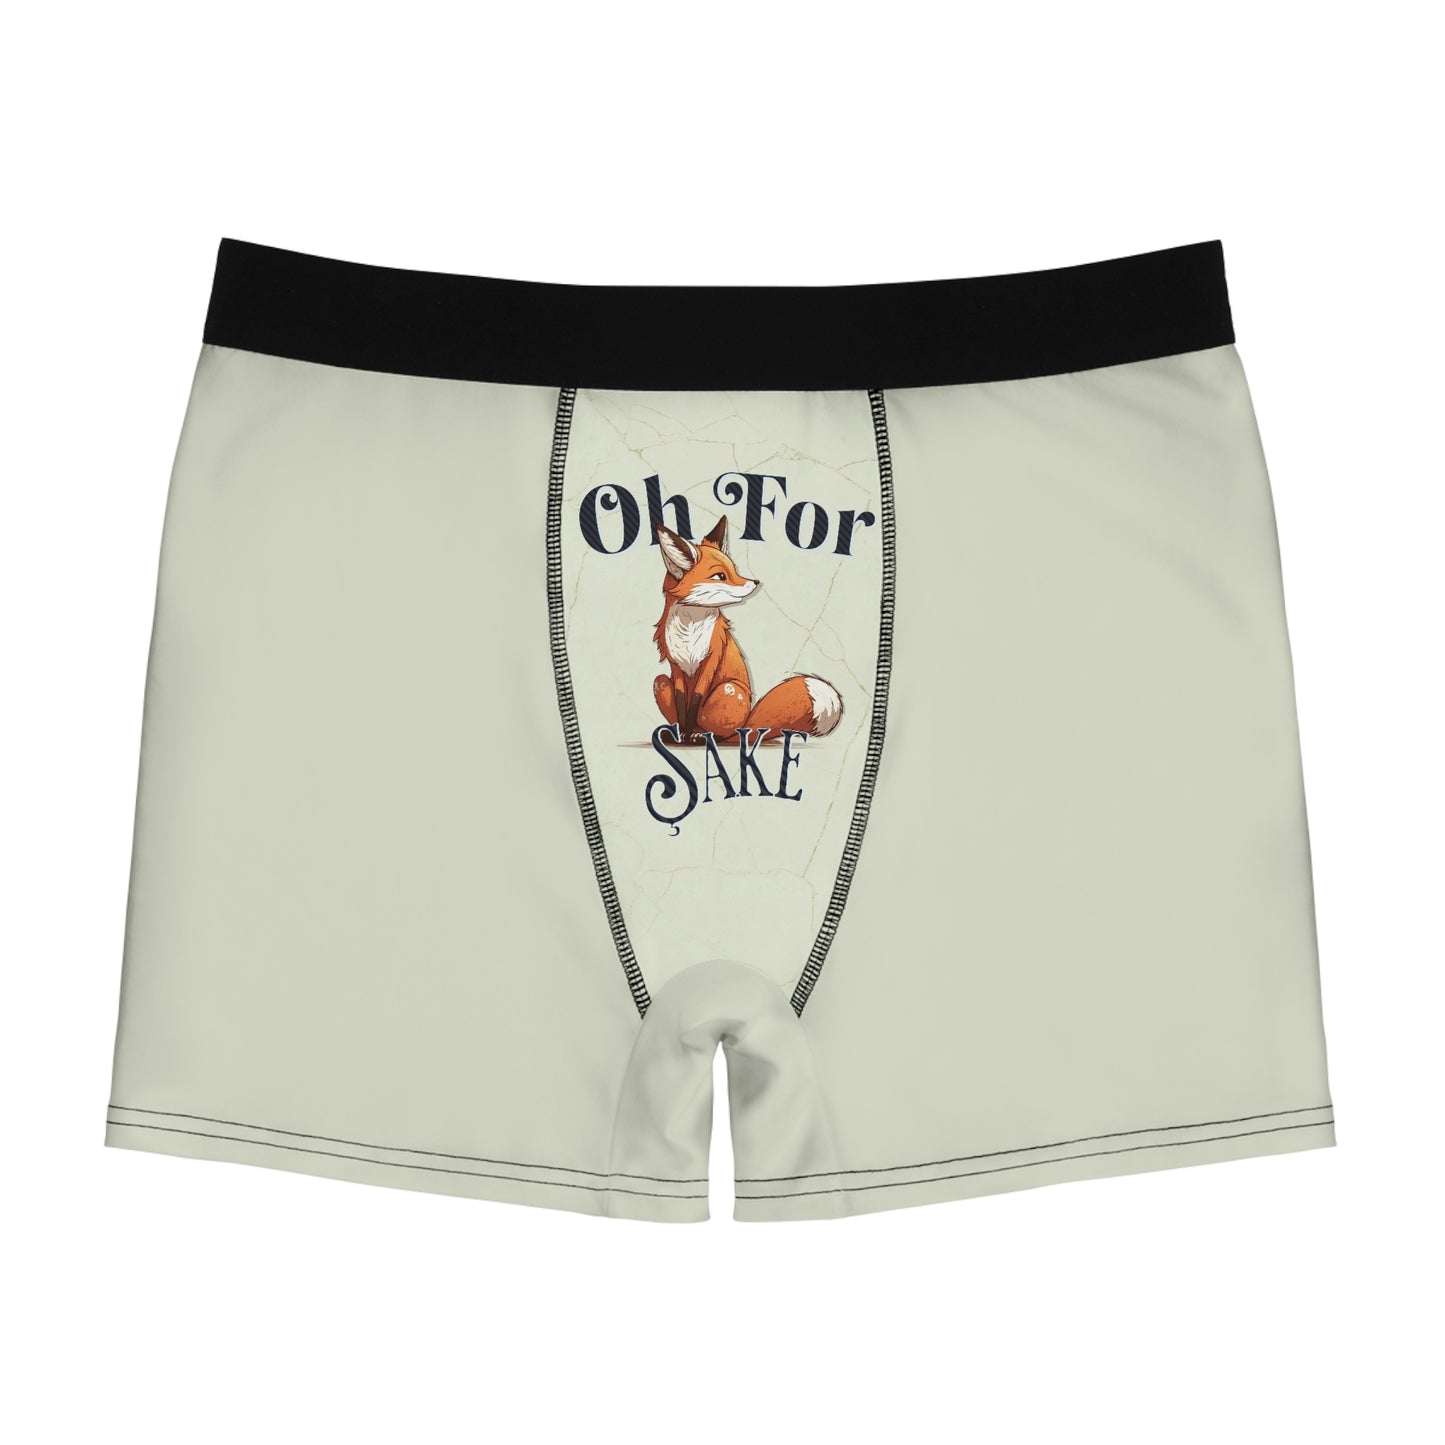 Oh For Fox Sake Boxers for Men, Boyfriend Xmas Gift, Newlywed Gift, Underwear Men, Men's Boxer Briefs - Sand